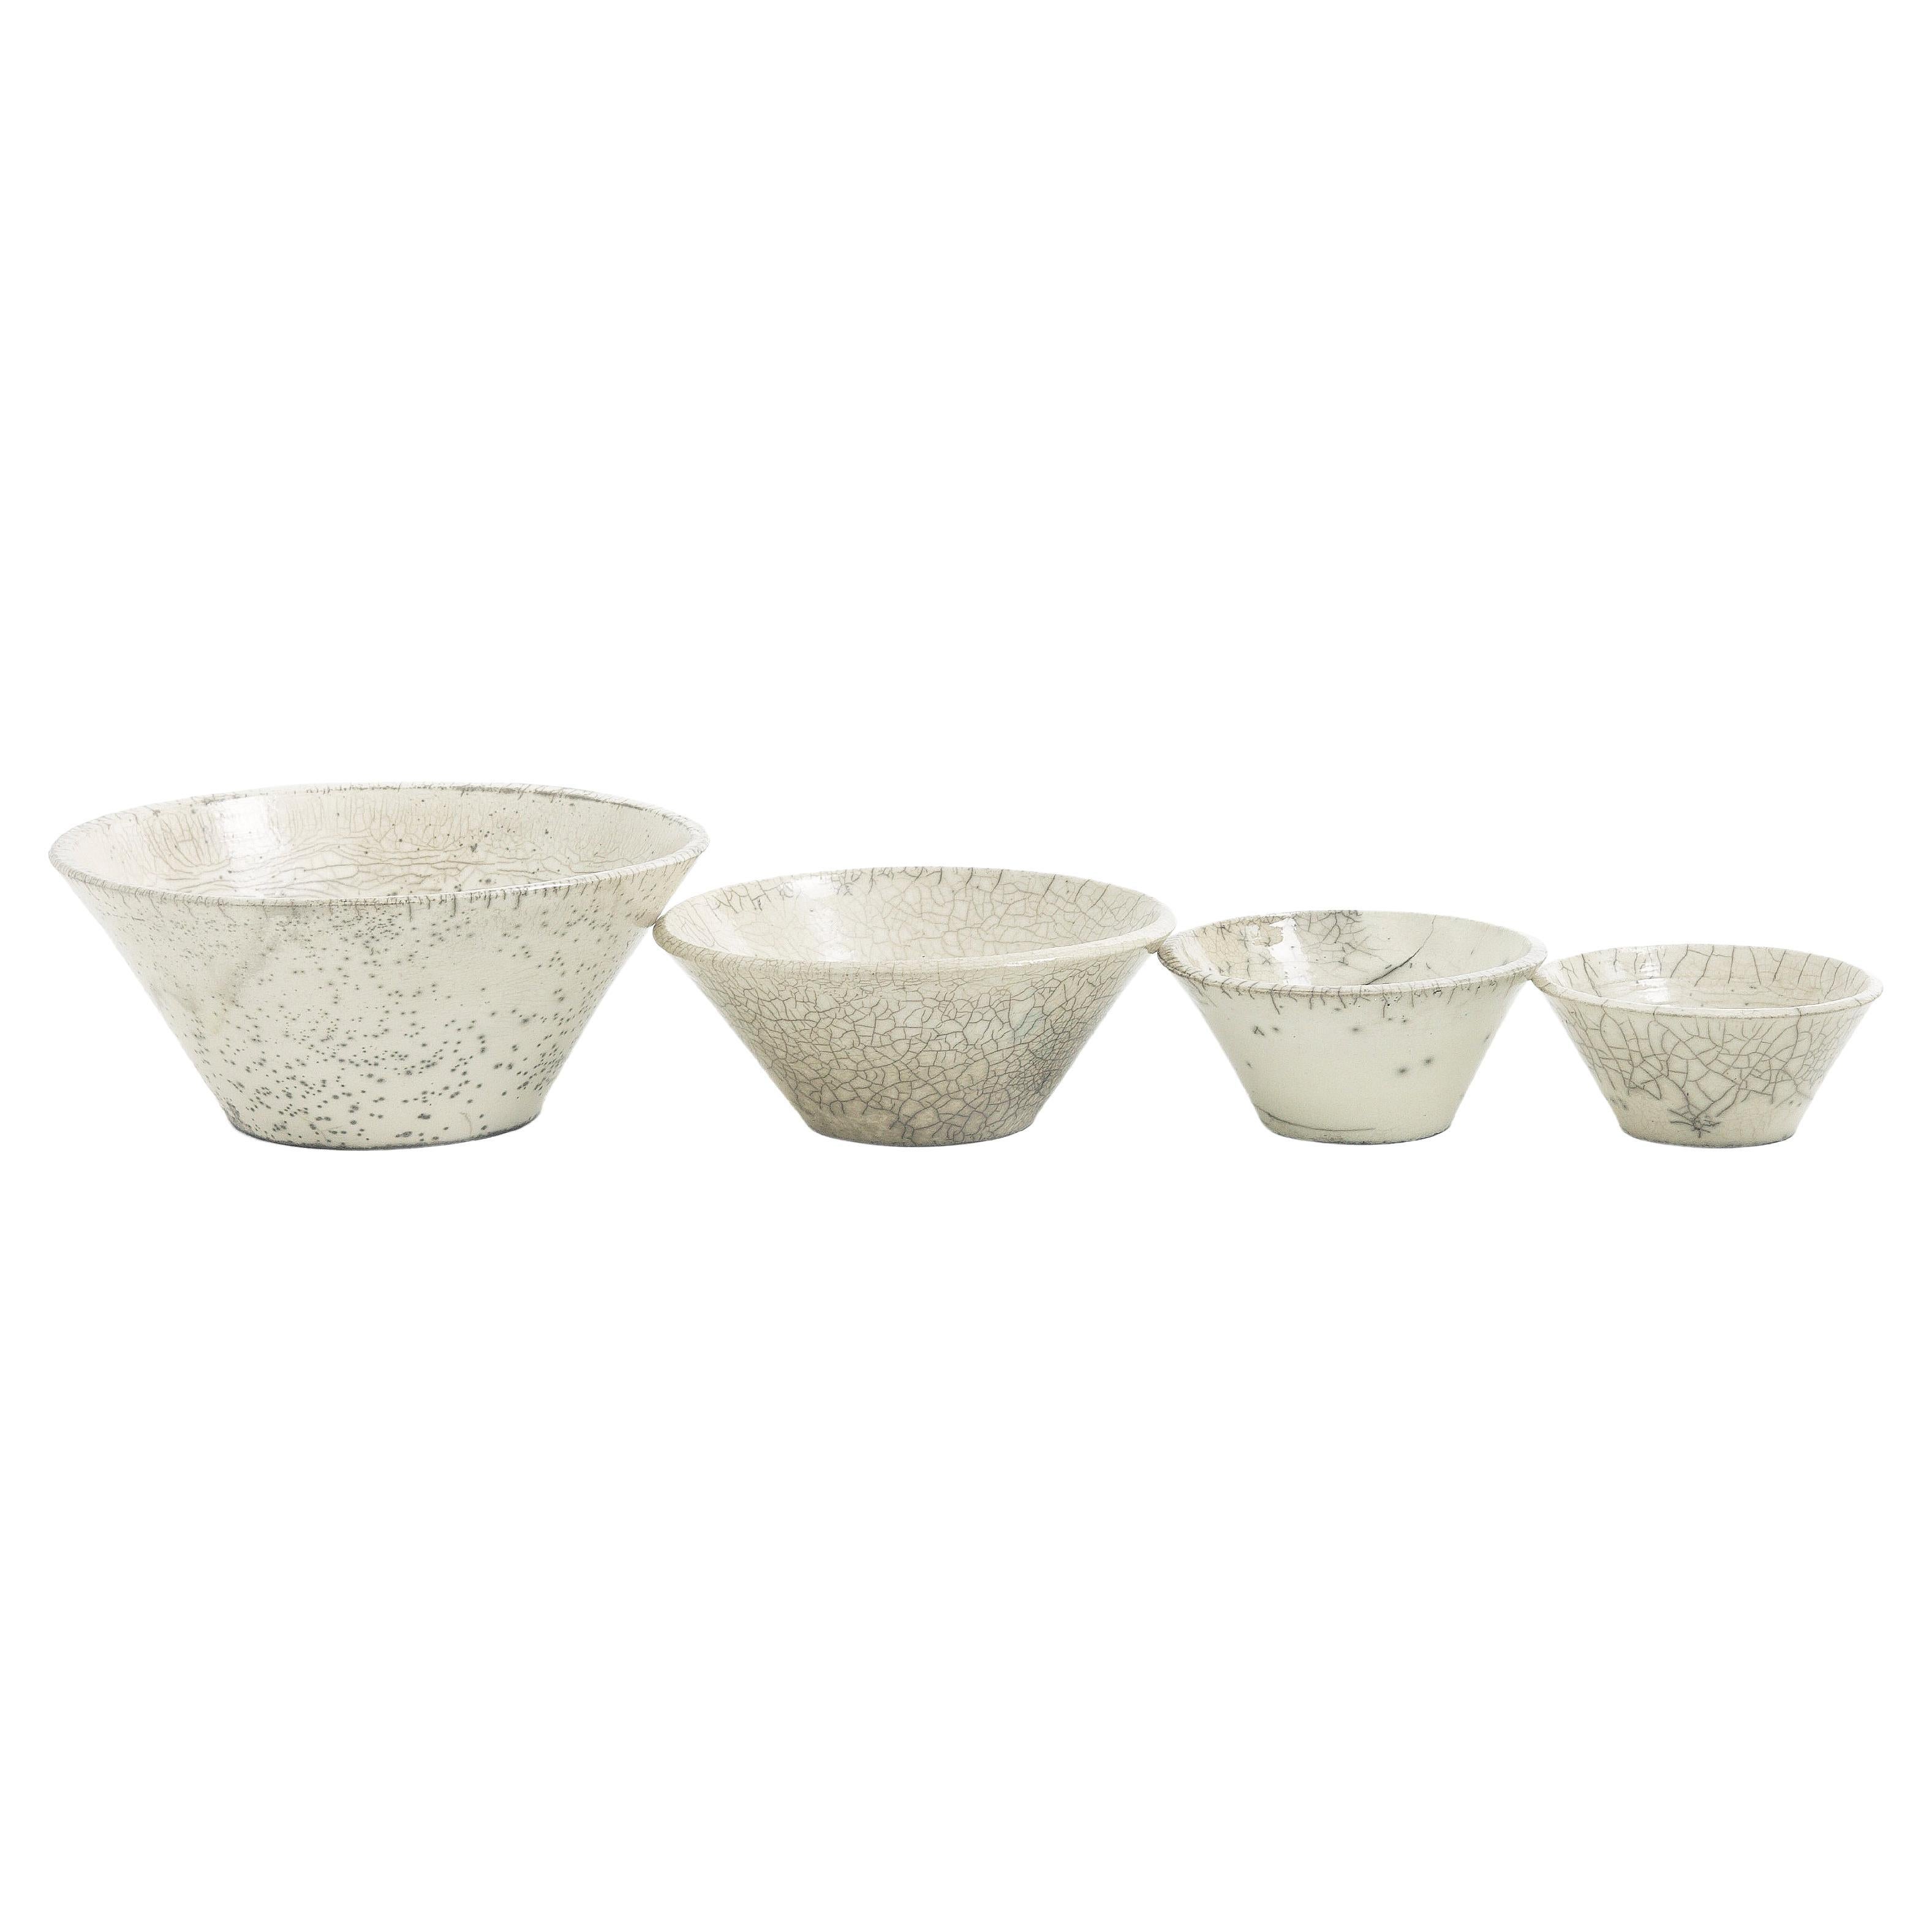 Japanese Minimalistic LAAB Moon Set of 4 Bowls Raku Ceramics Crackle White